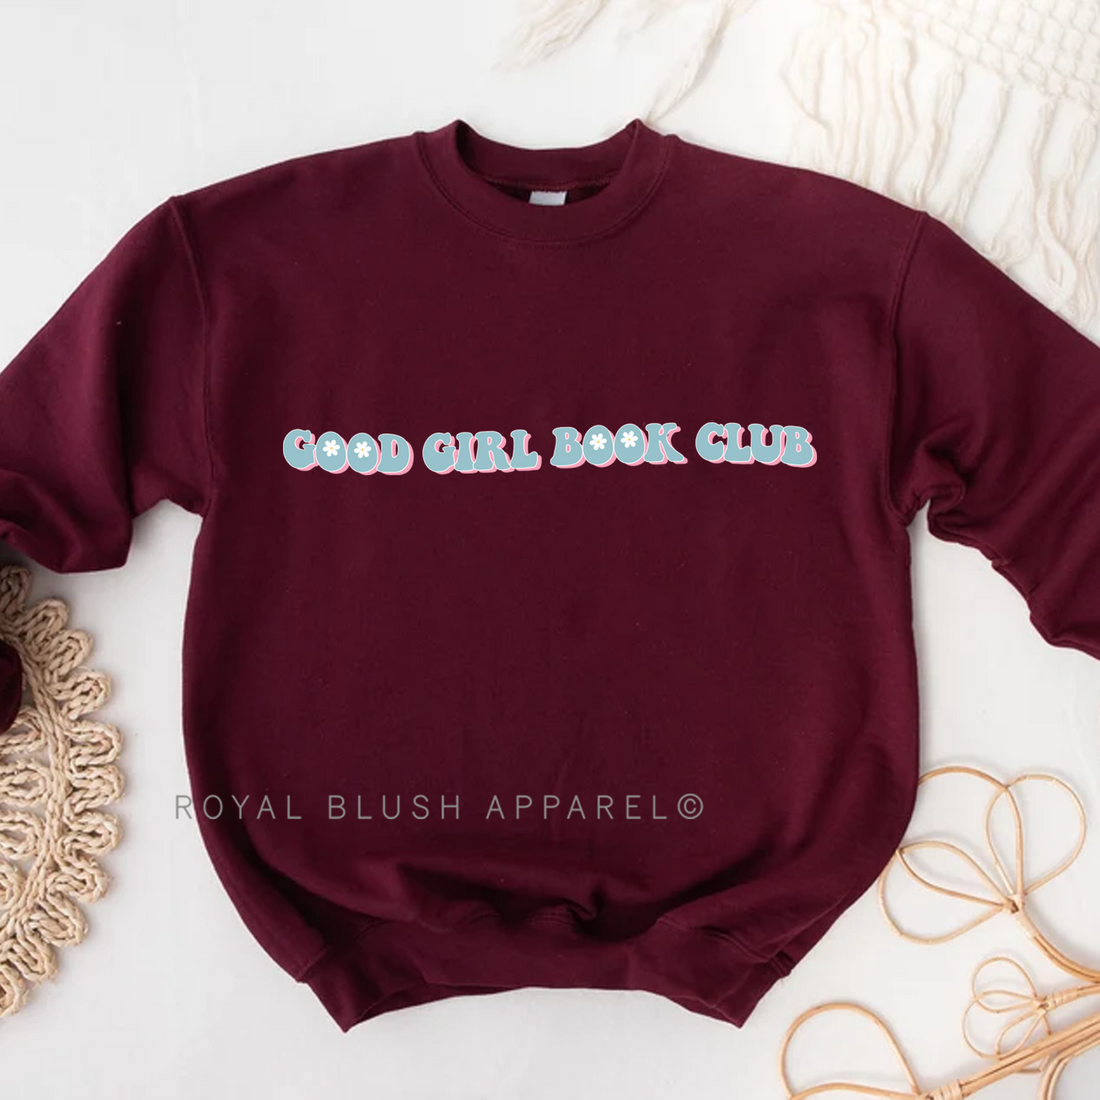 Good Girl Book Club Sweatshirt